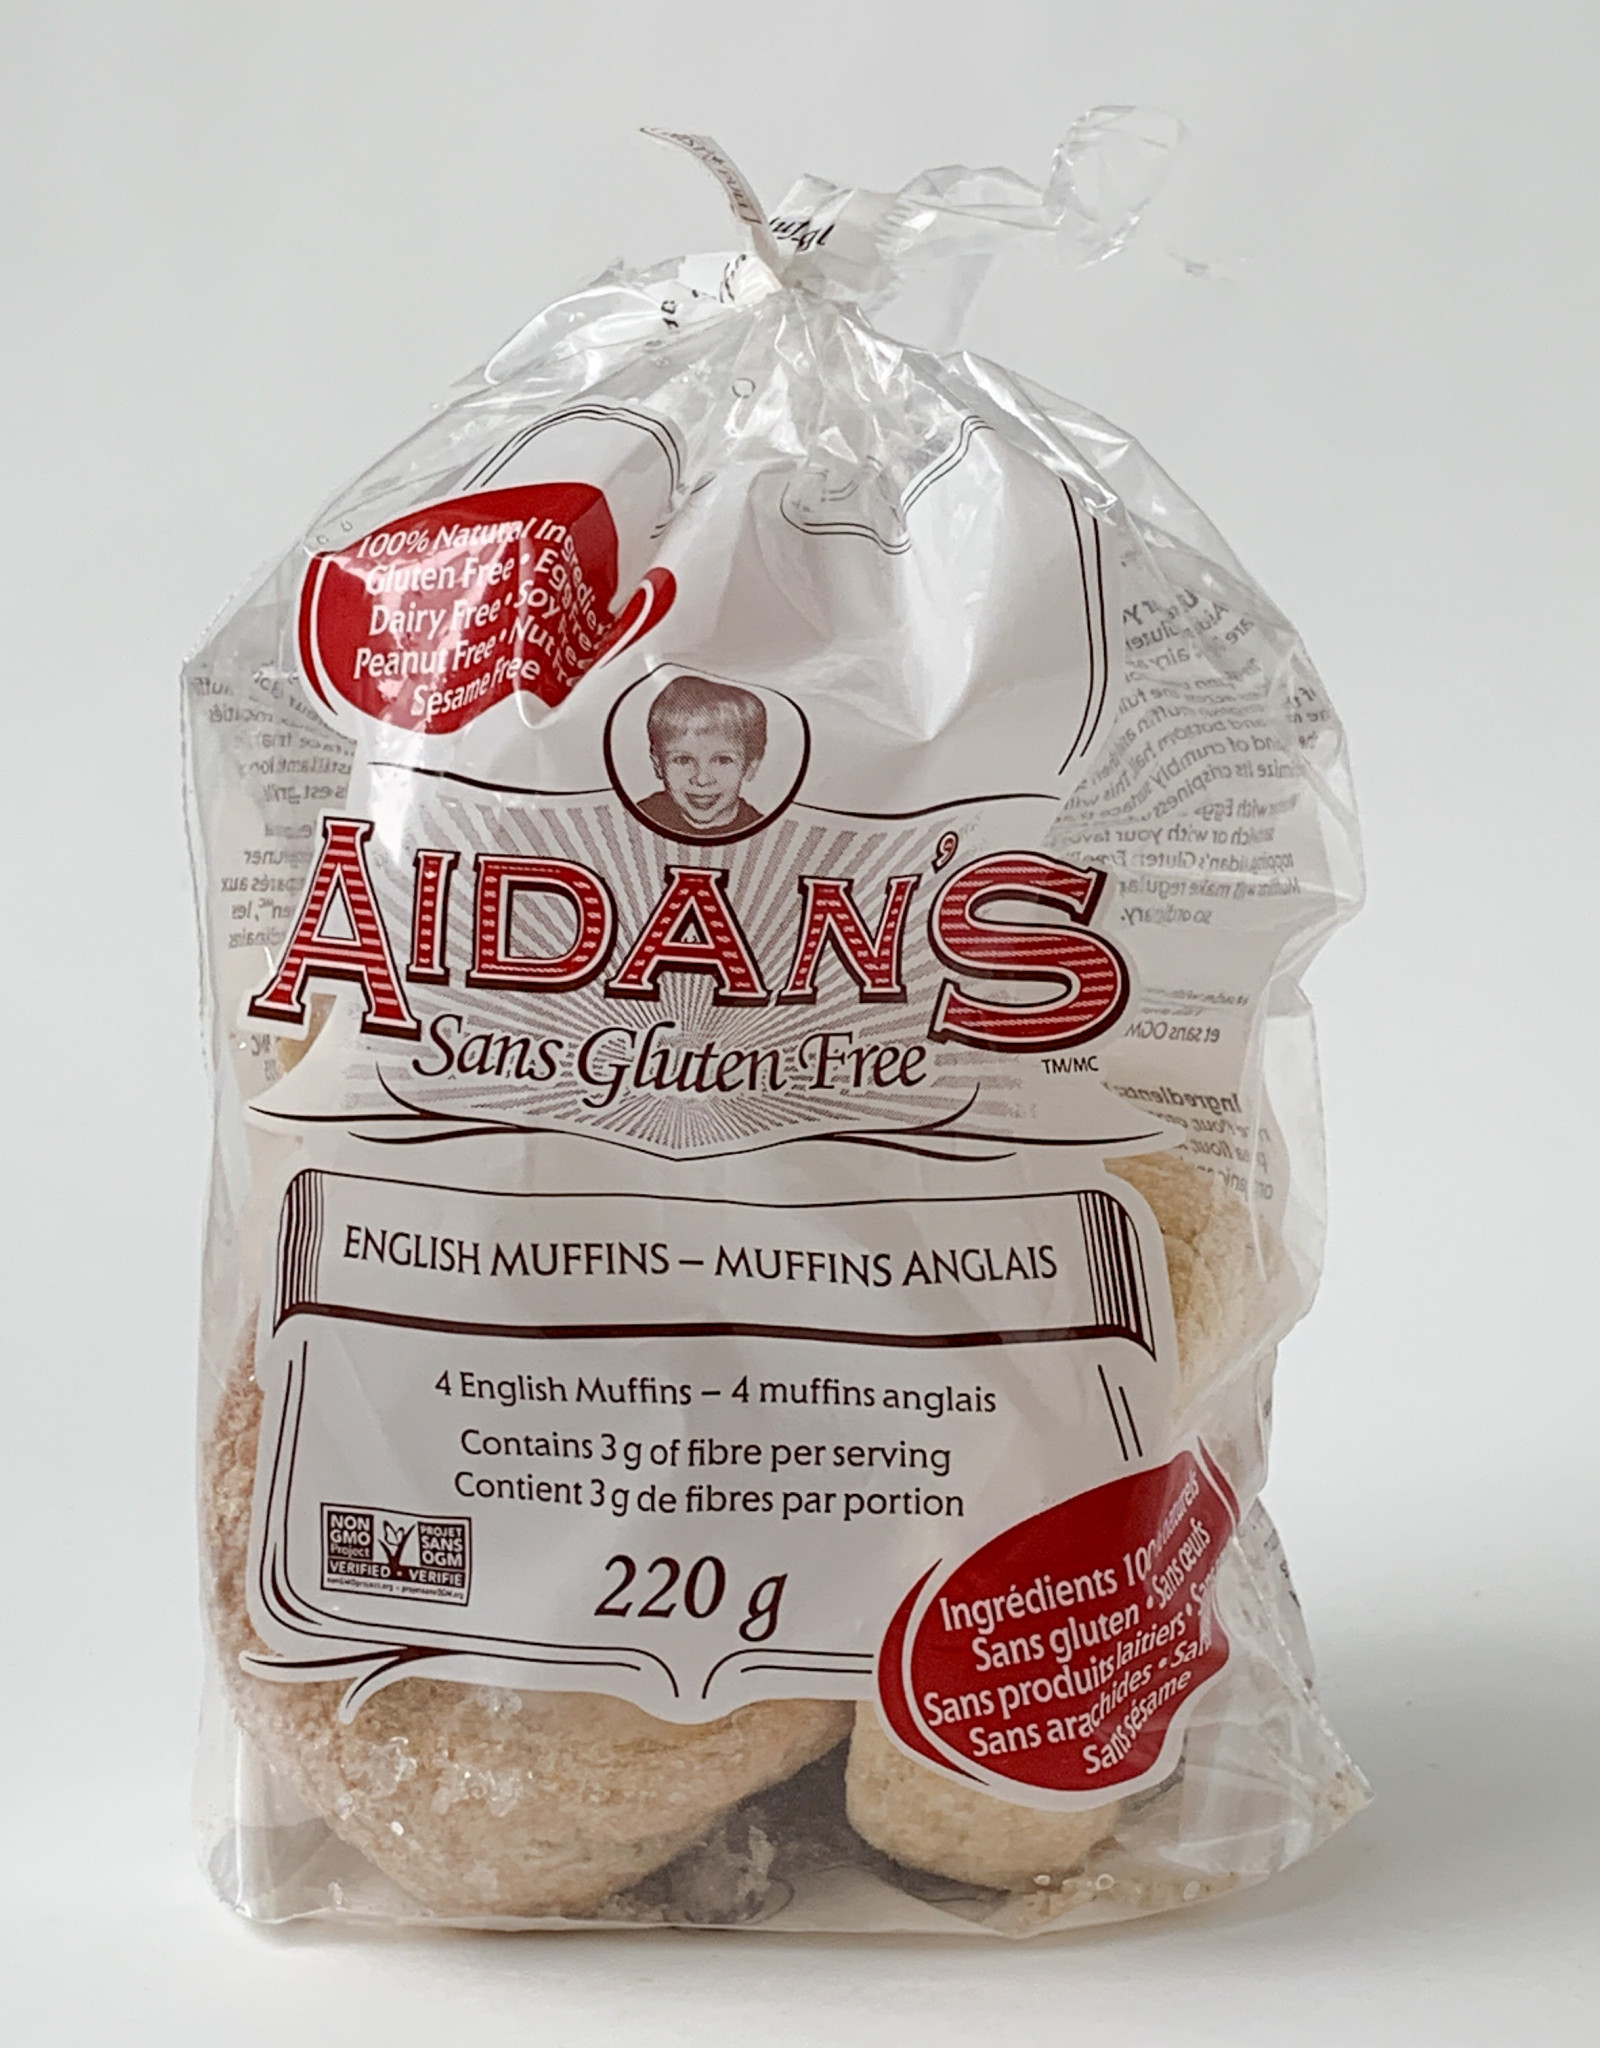 Aidens Aidans Gluten Free - English Muffin